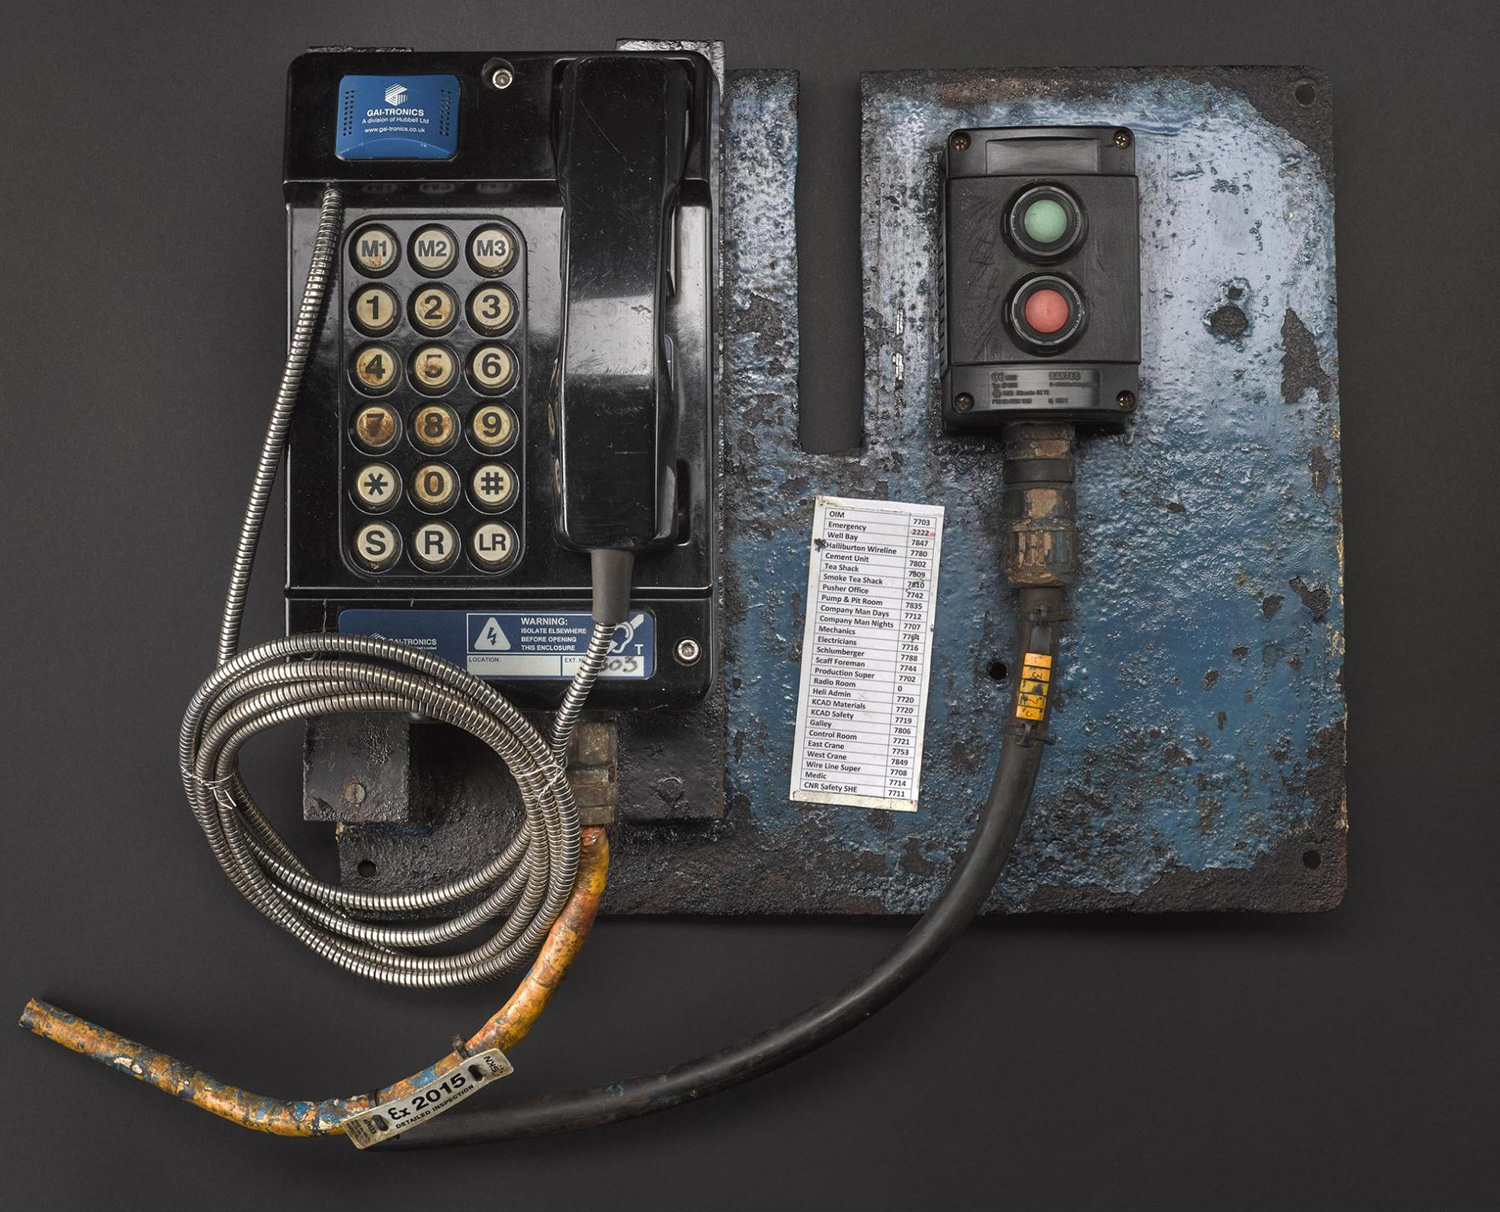 Driller’s telephone, Used on the Murchison platform, United Kingdom, c.1979